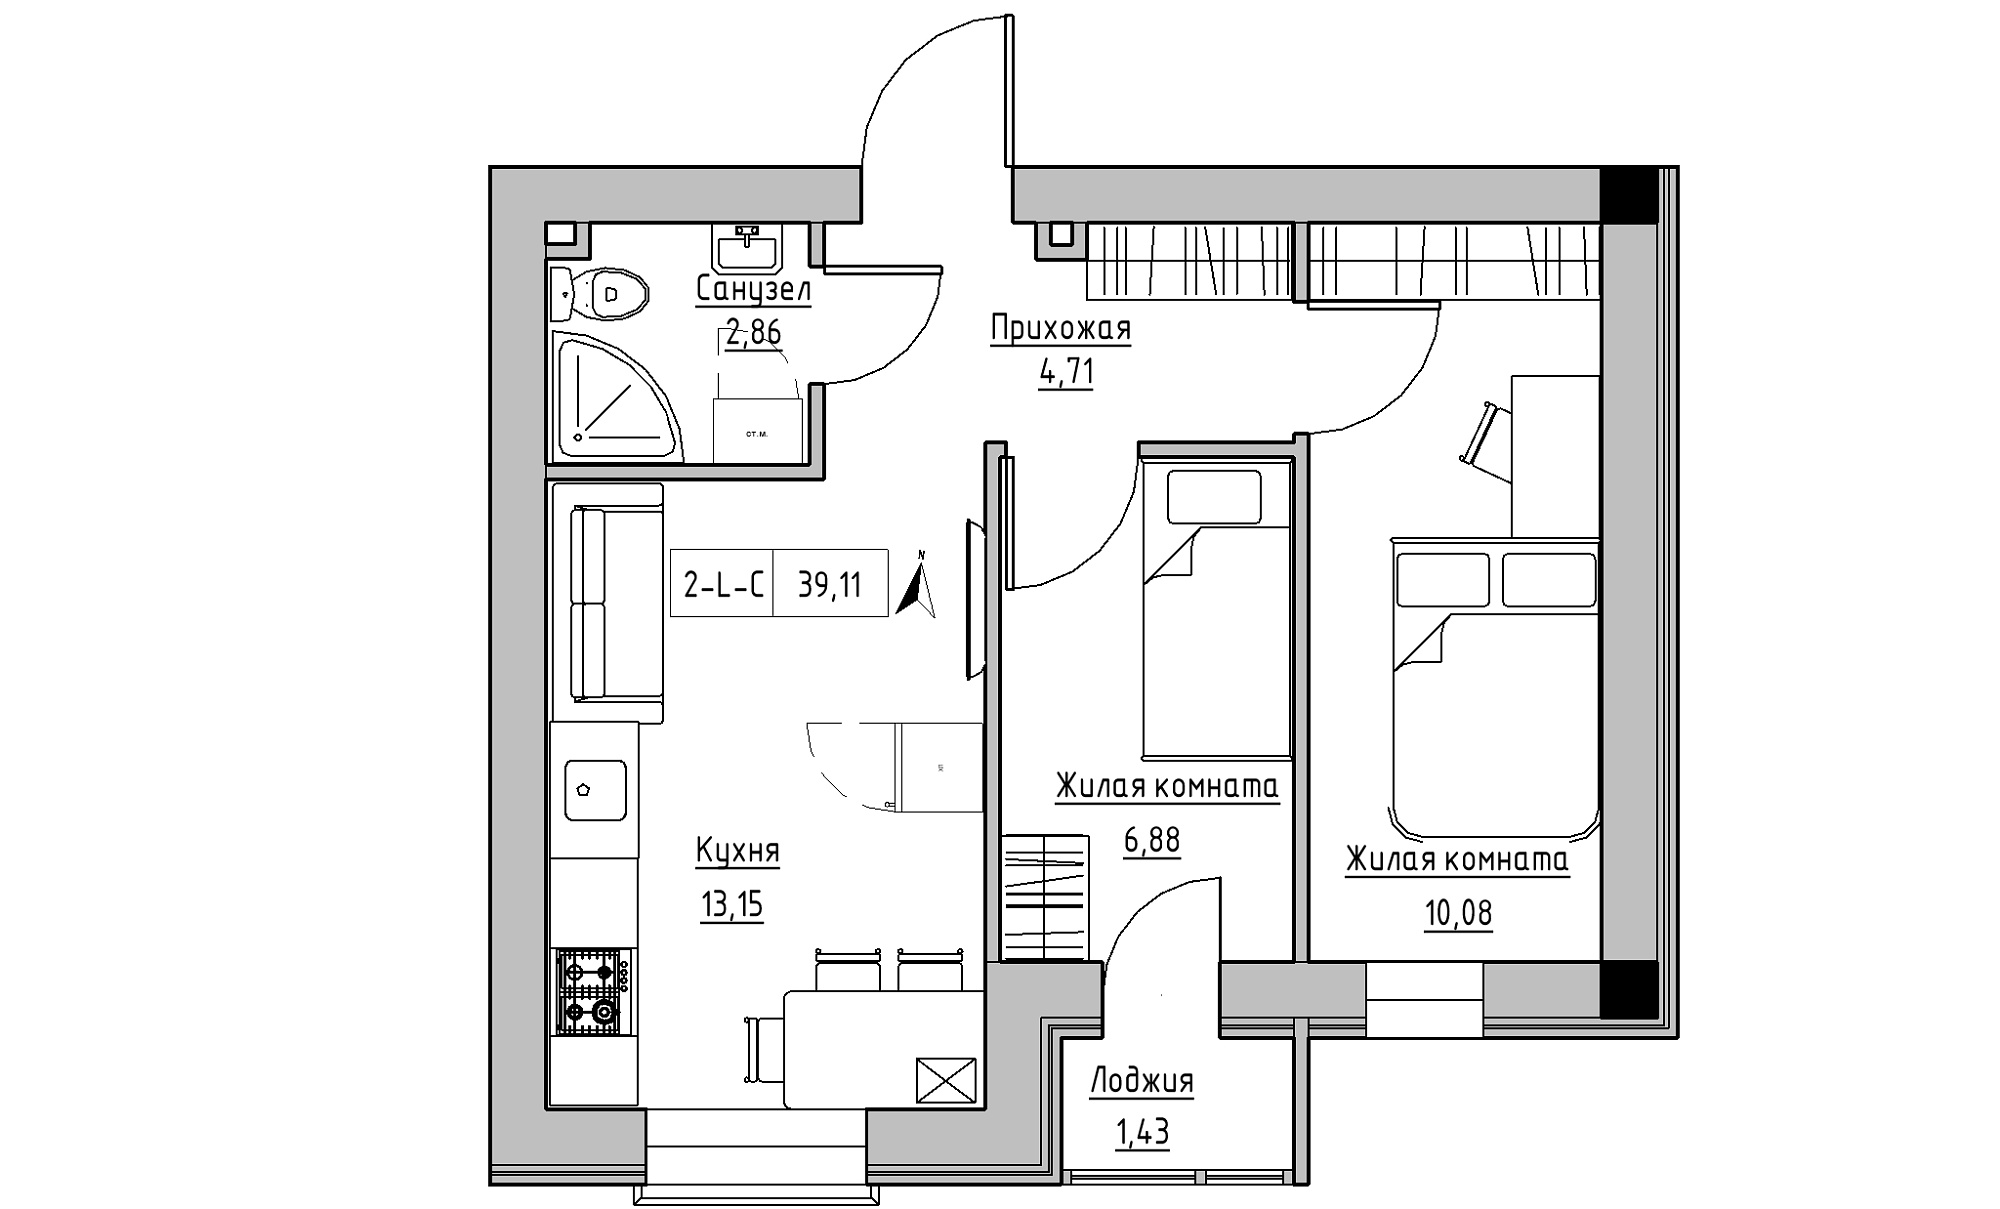 Planning 2-rm flats area 39.11m2, KS-016-01/0005.